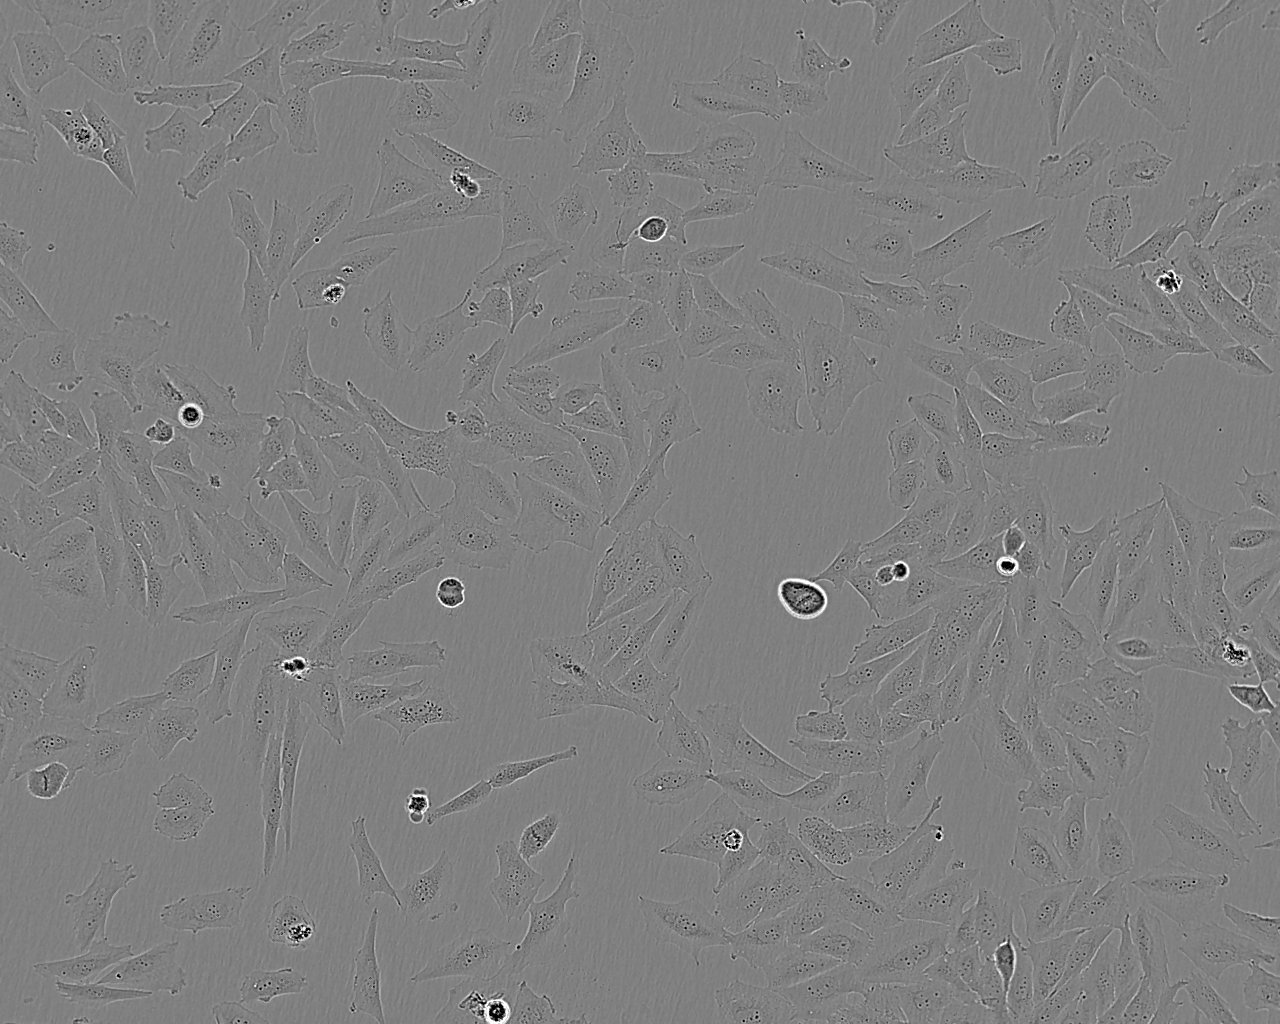 COLO 741 Fresh Cells|人直肠癌细胞(送STR基因图谱)